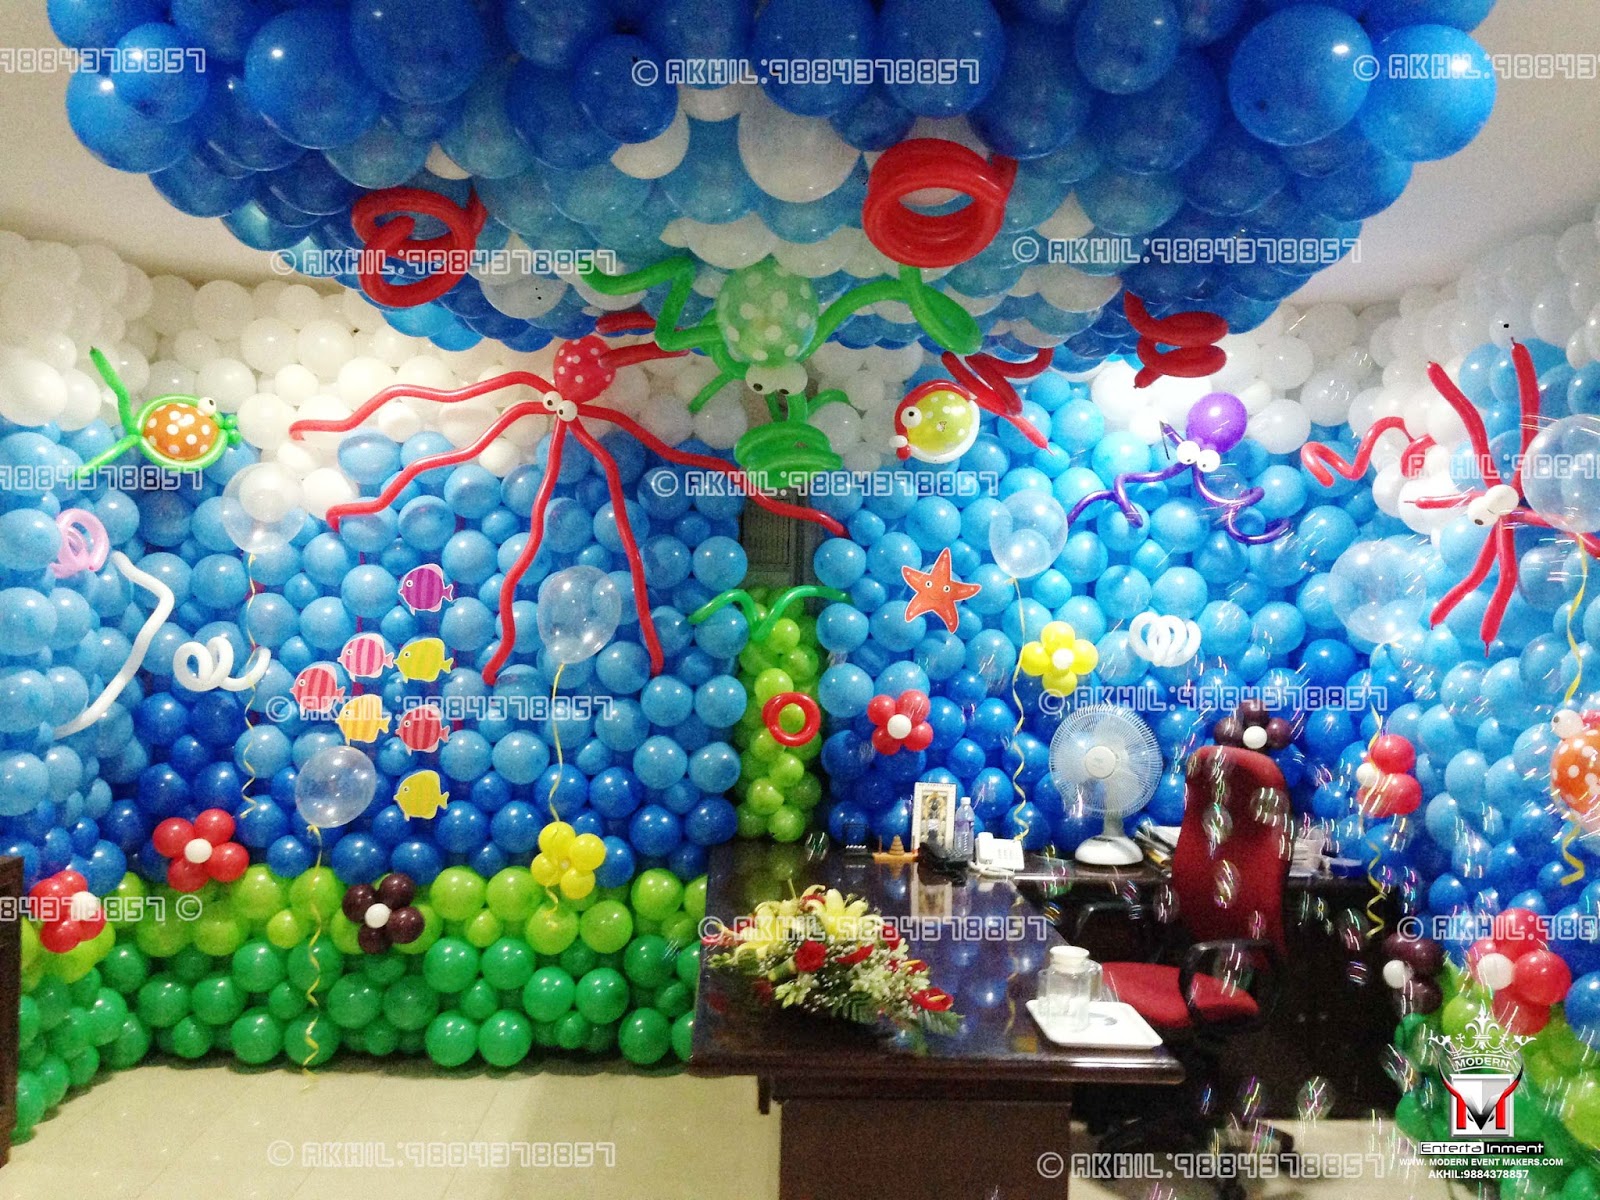  Balloon  Party  Decorators Balloon  Decorations  Birthday  